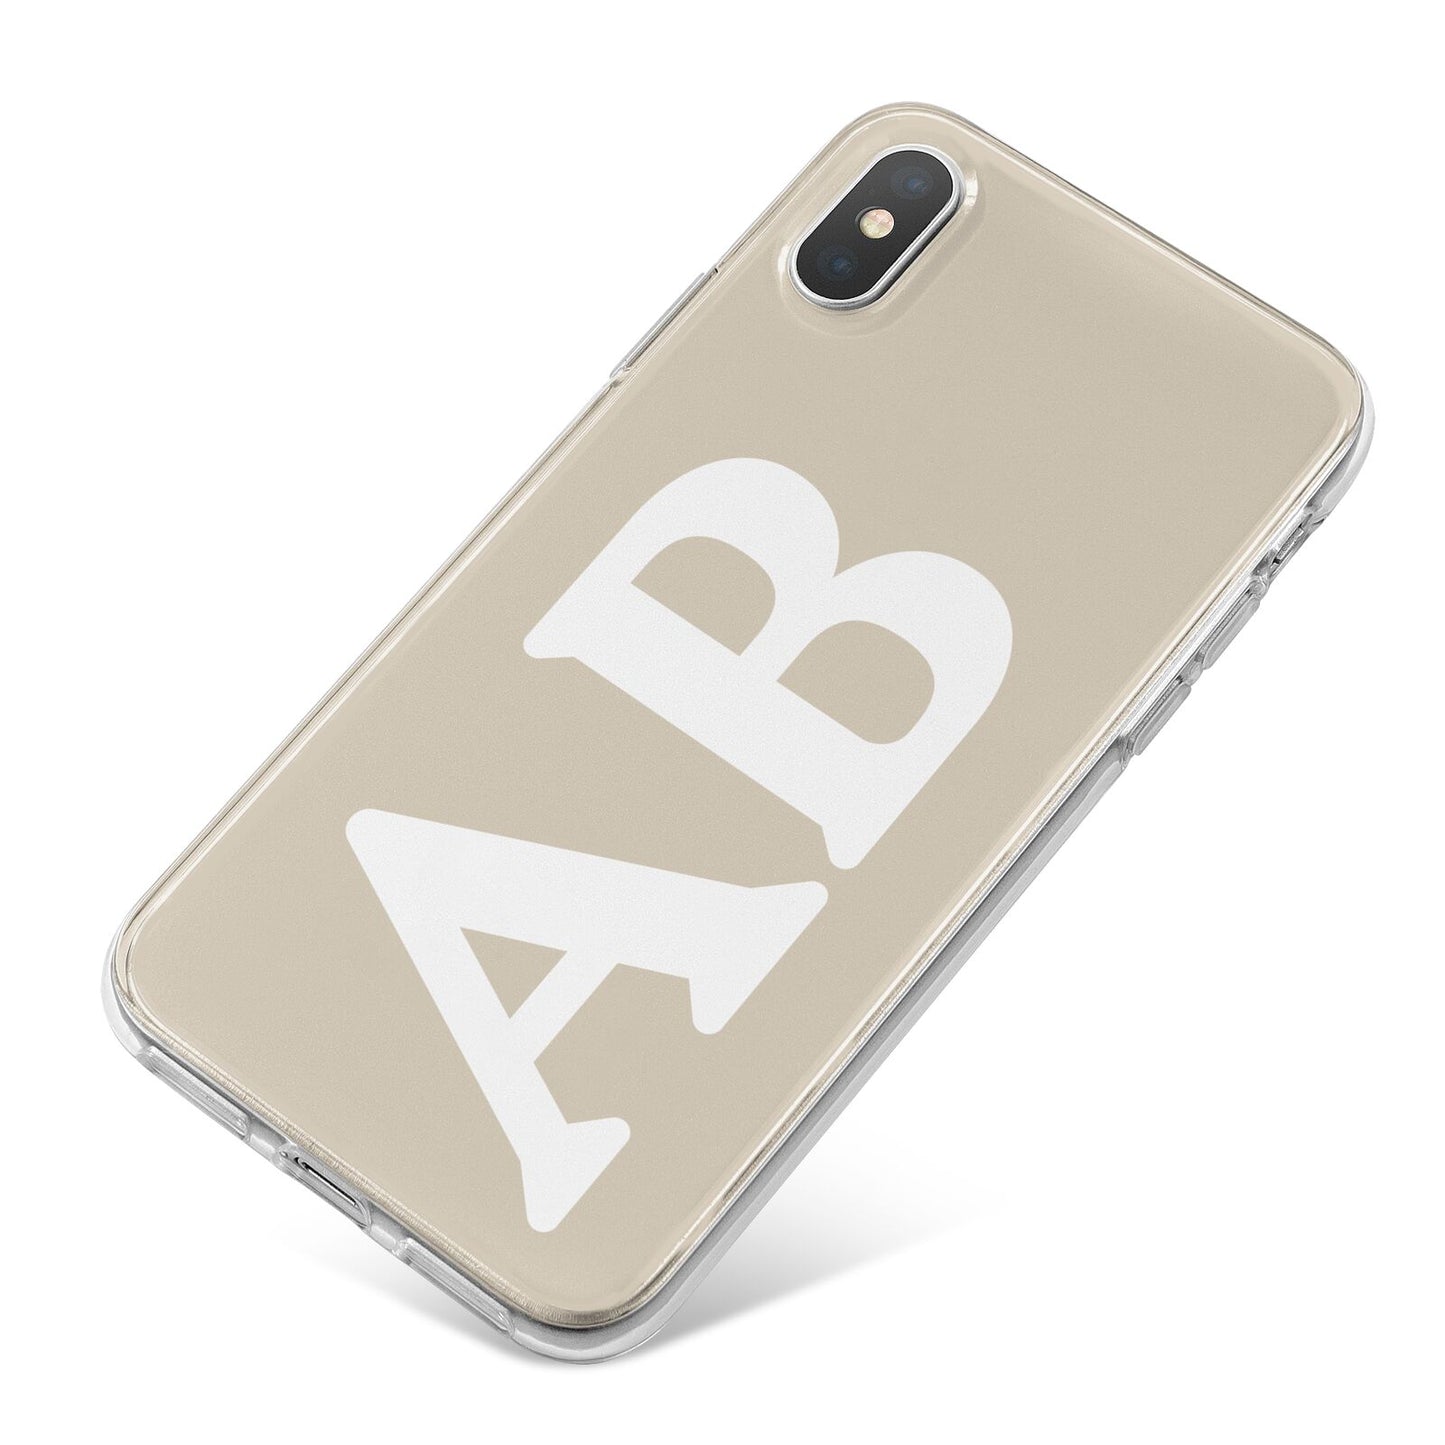 Initials iPhone X Bumper Case on Silver iPhone